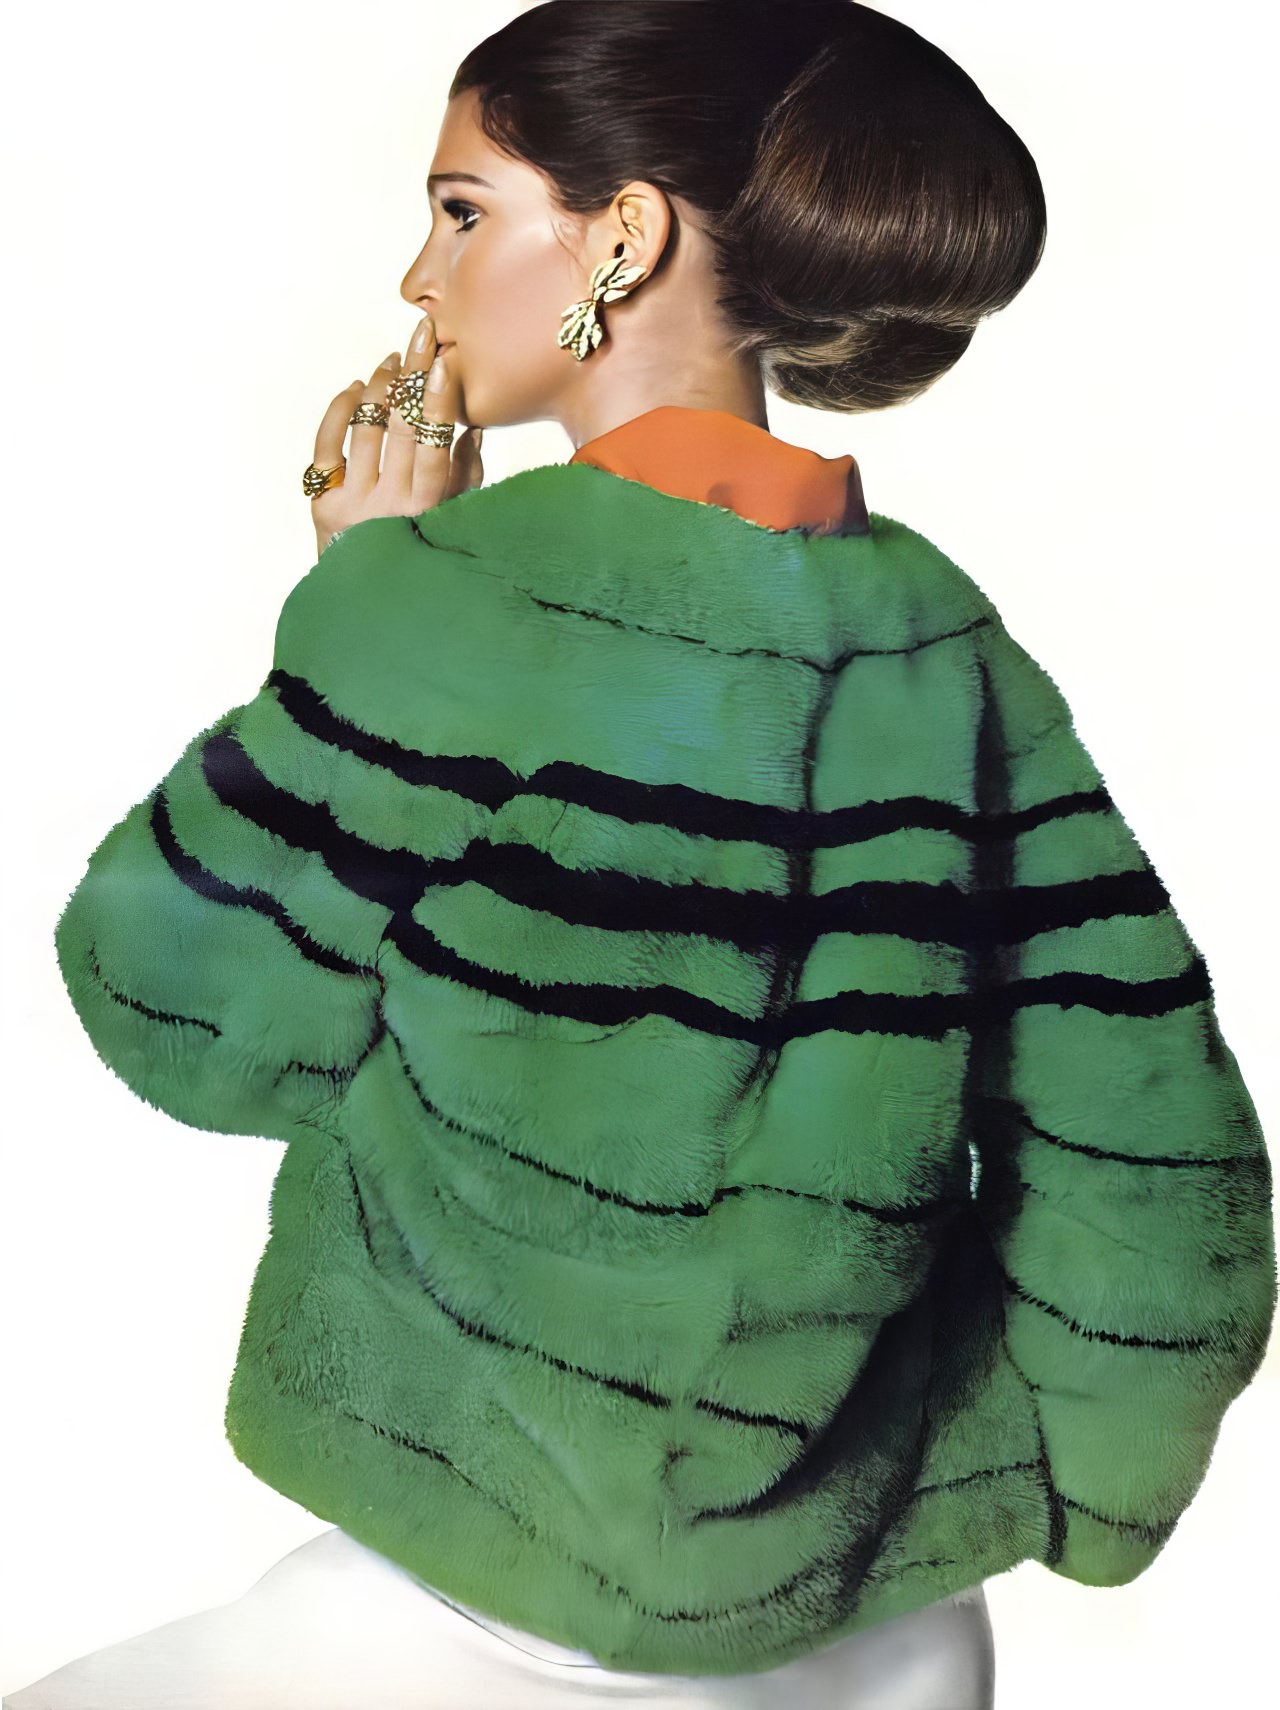 Ann Turkel in a SAGA mink jacket by Reiss & Fabrizio, 1968.